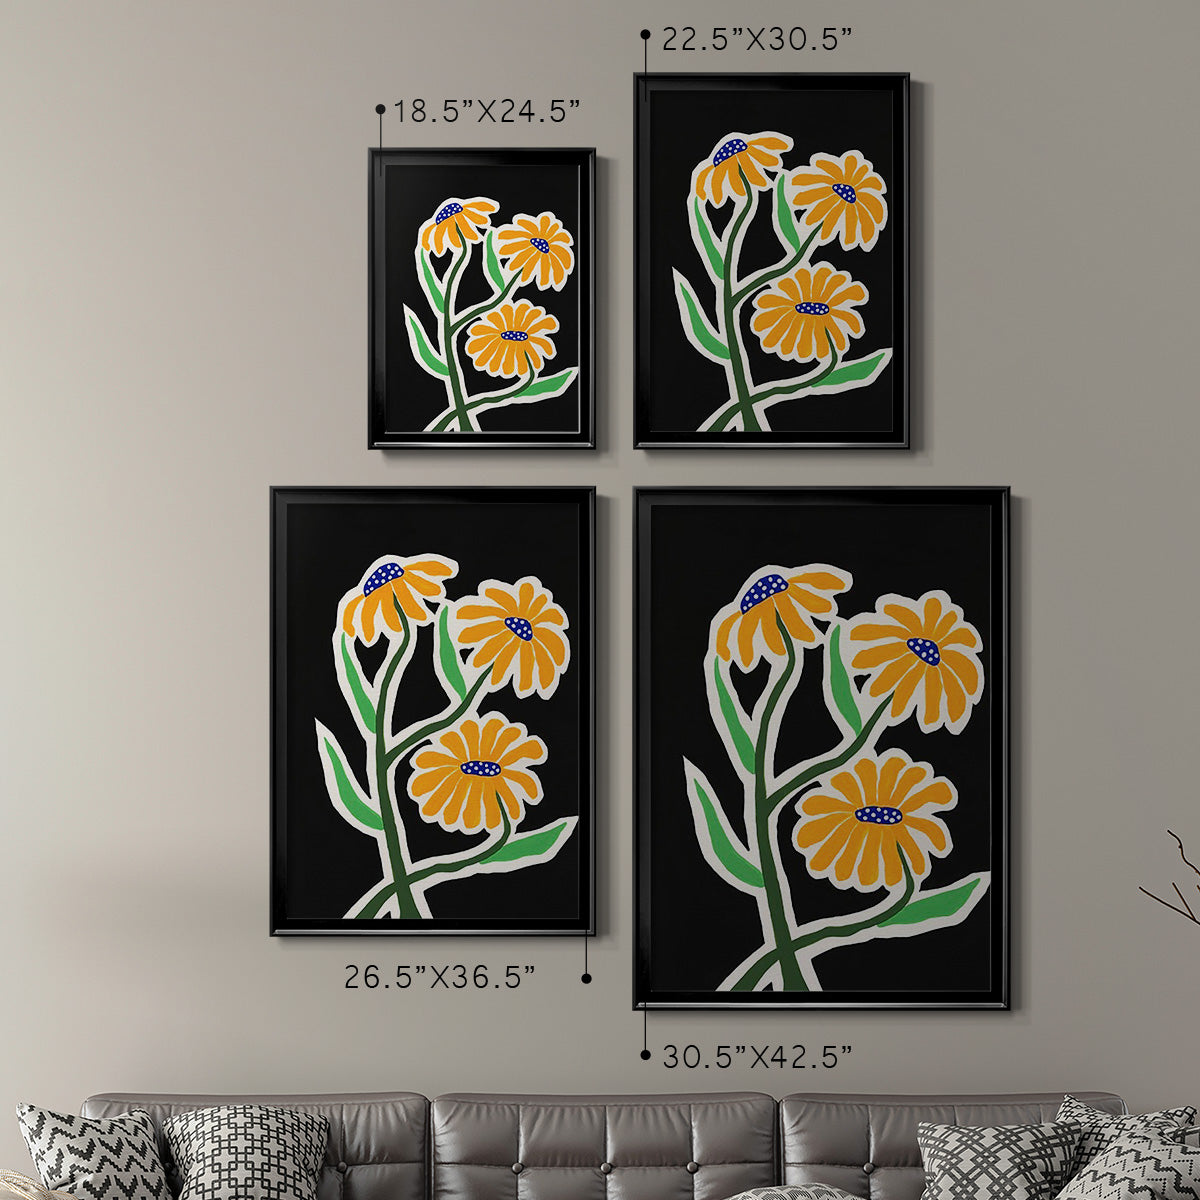 Pop Flowers I Premium Framed Print - Ready to Hang